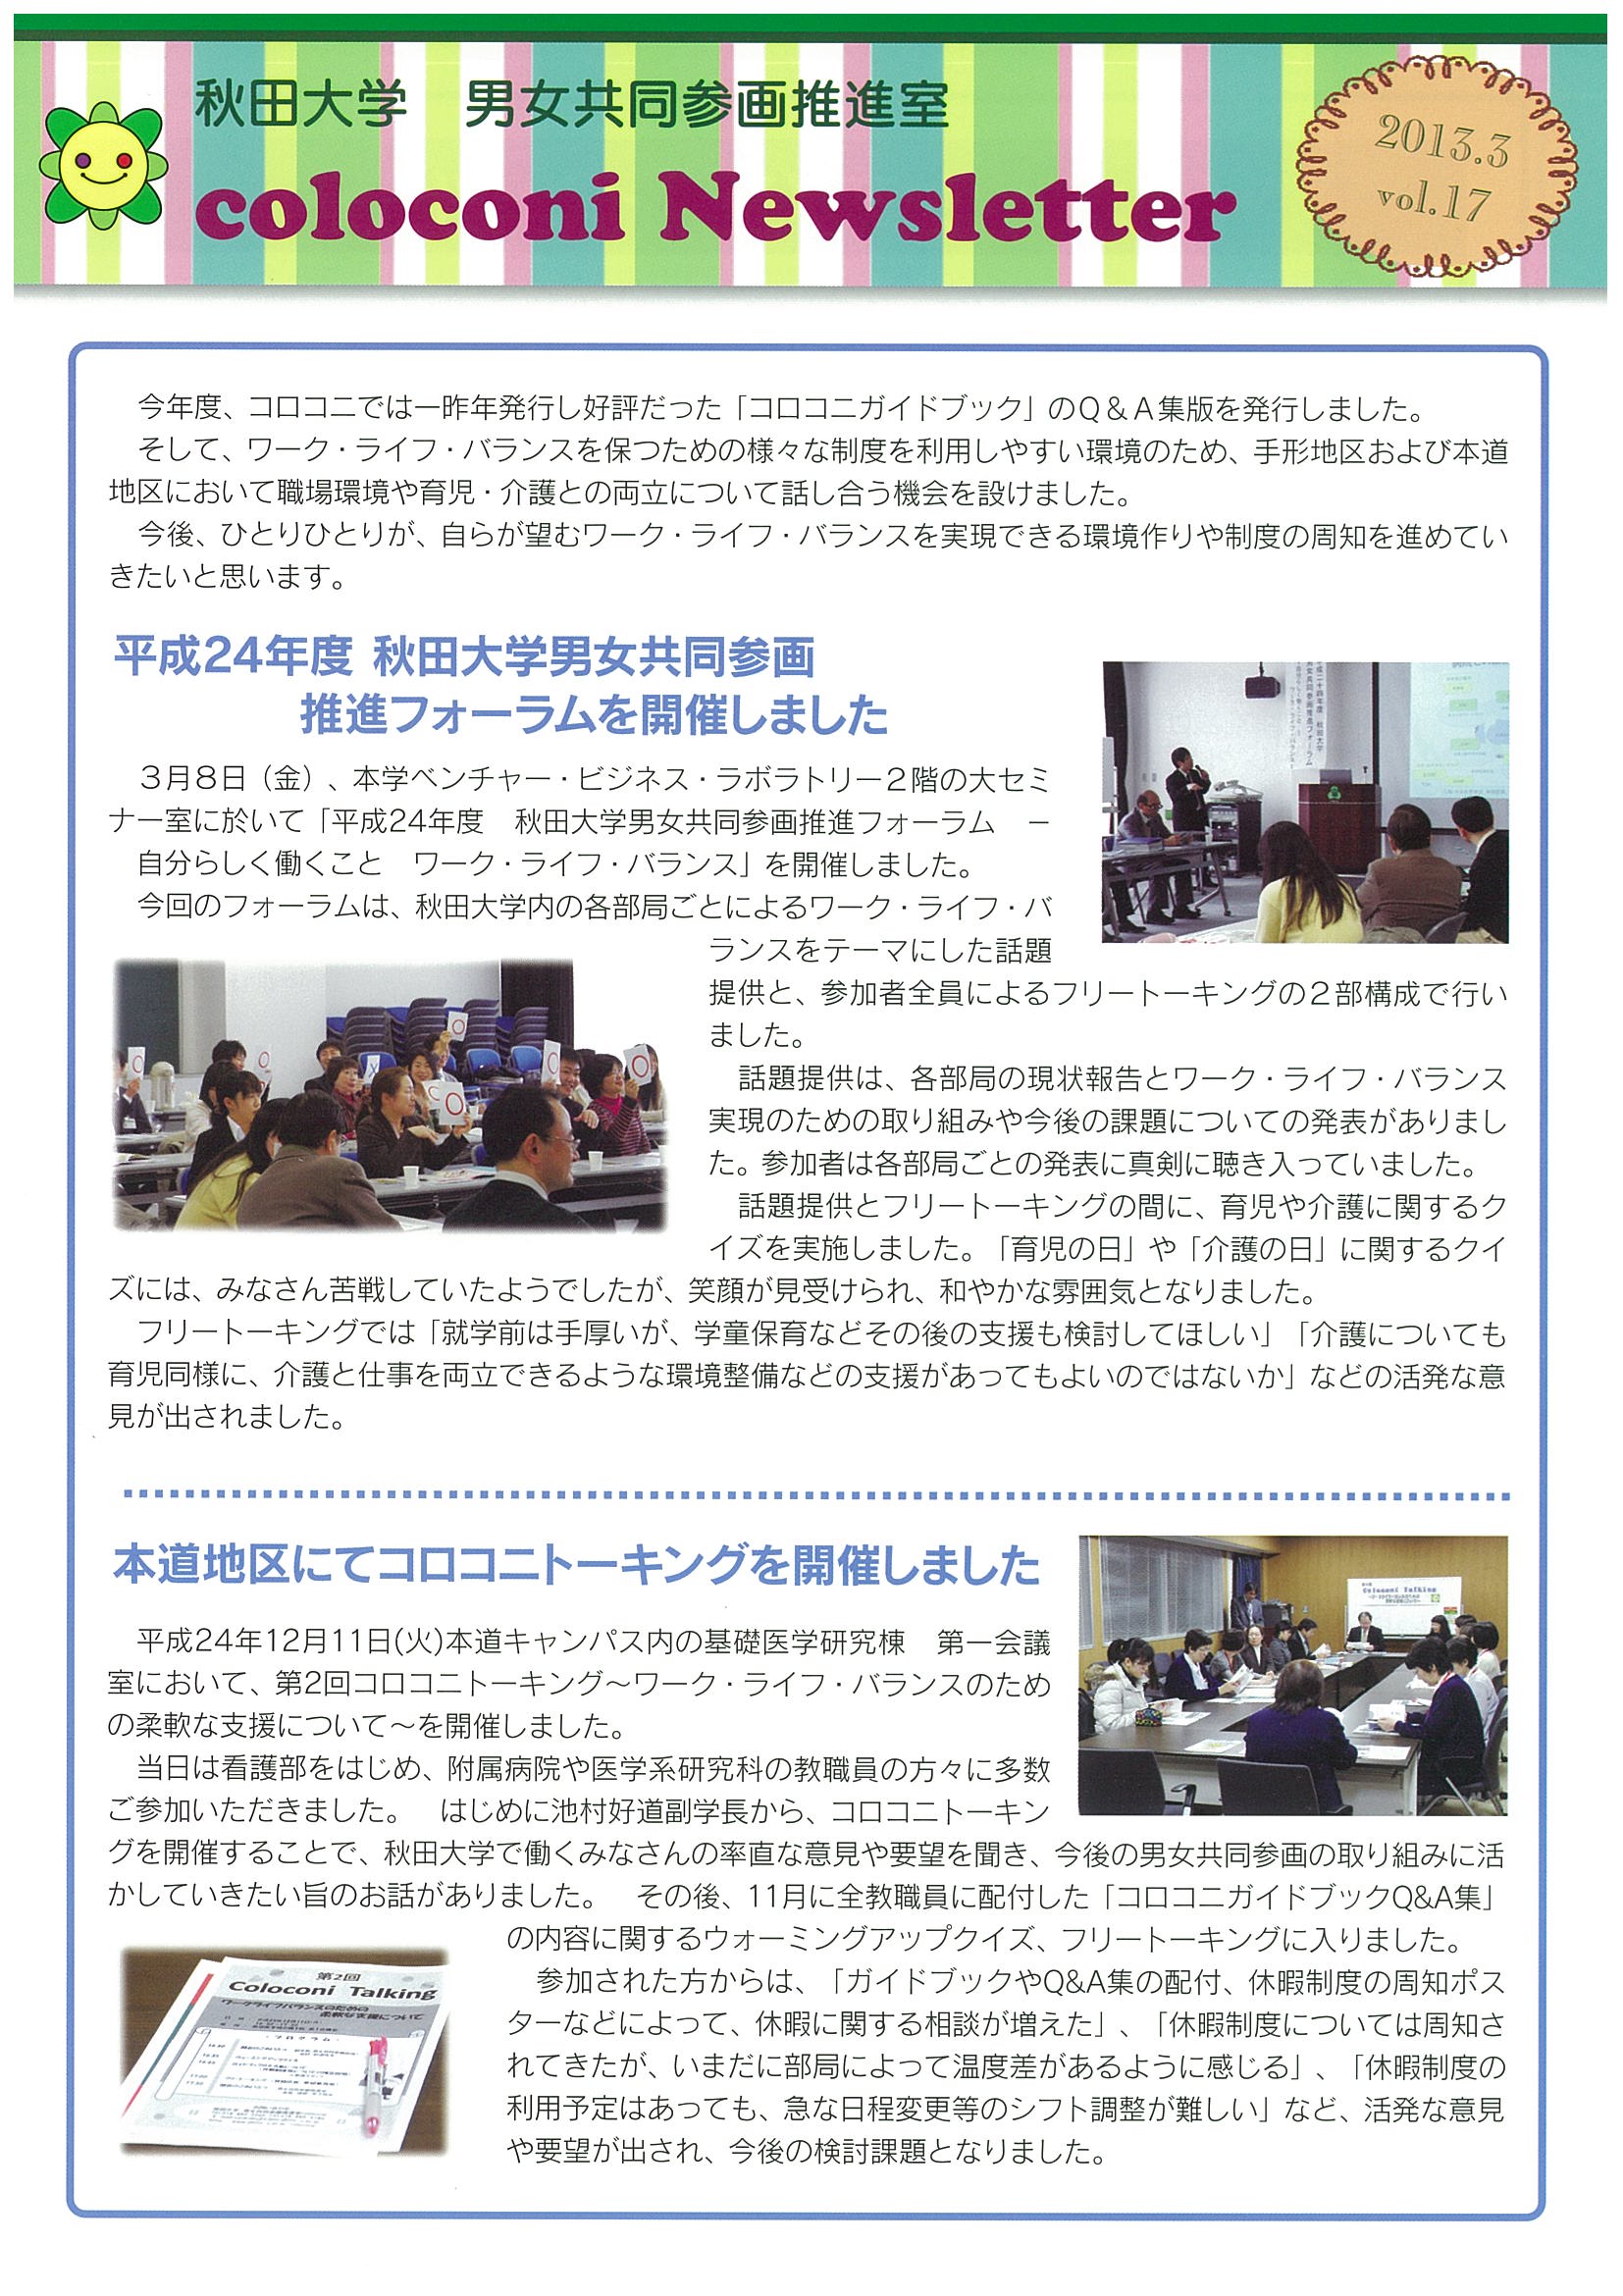 Newsletter　【vol.17 (2013.3)】 